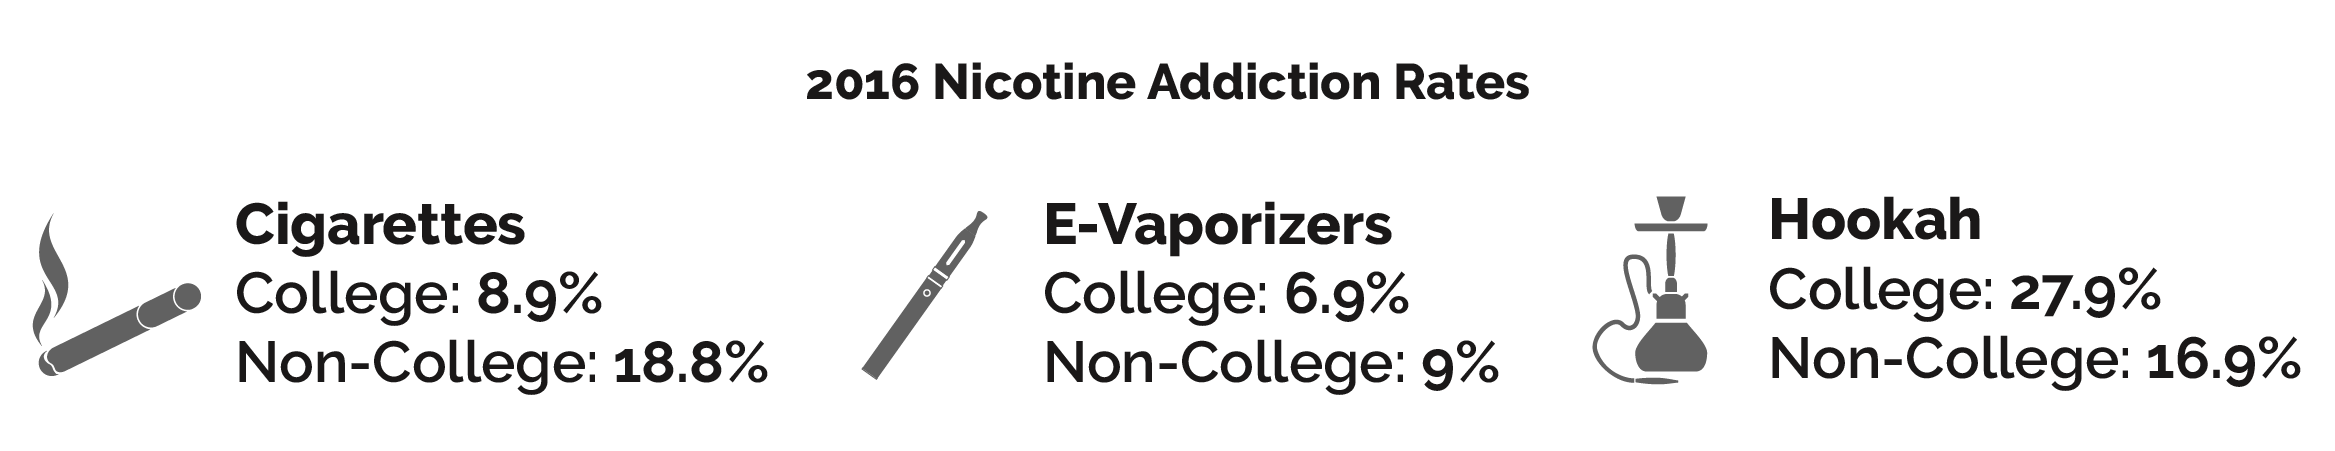 Addiction and Age Groups - Nicotine